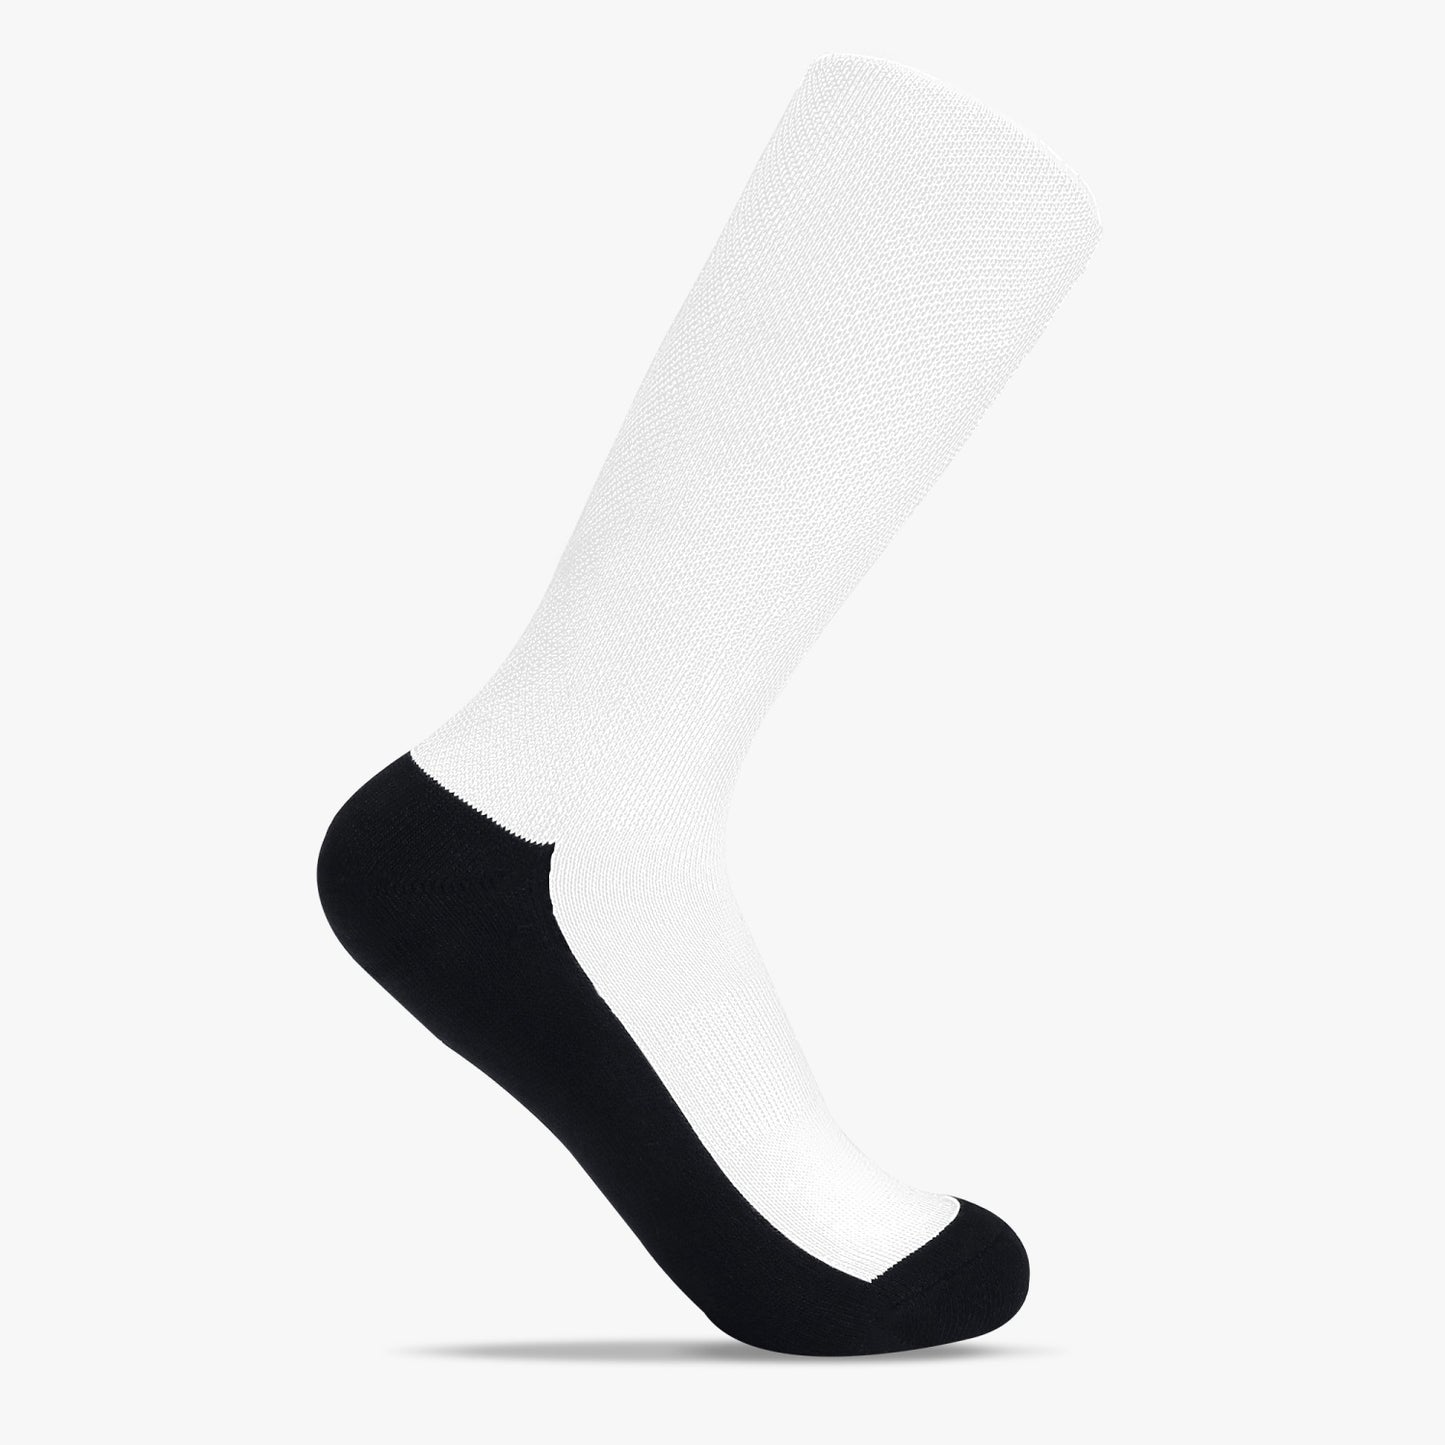 FORMULA FORD OFFICIAL Reinforced Sports Socks